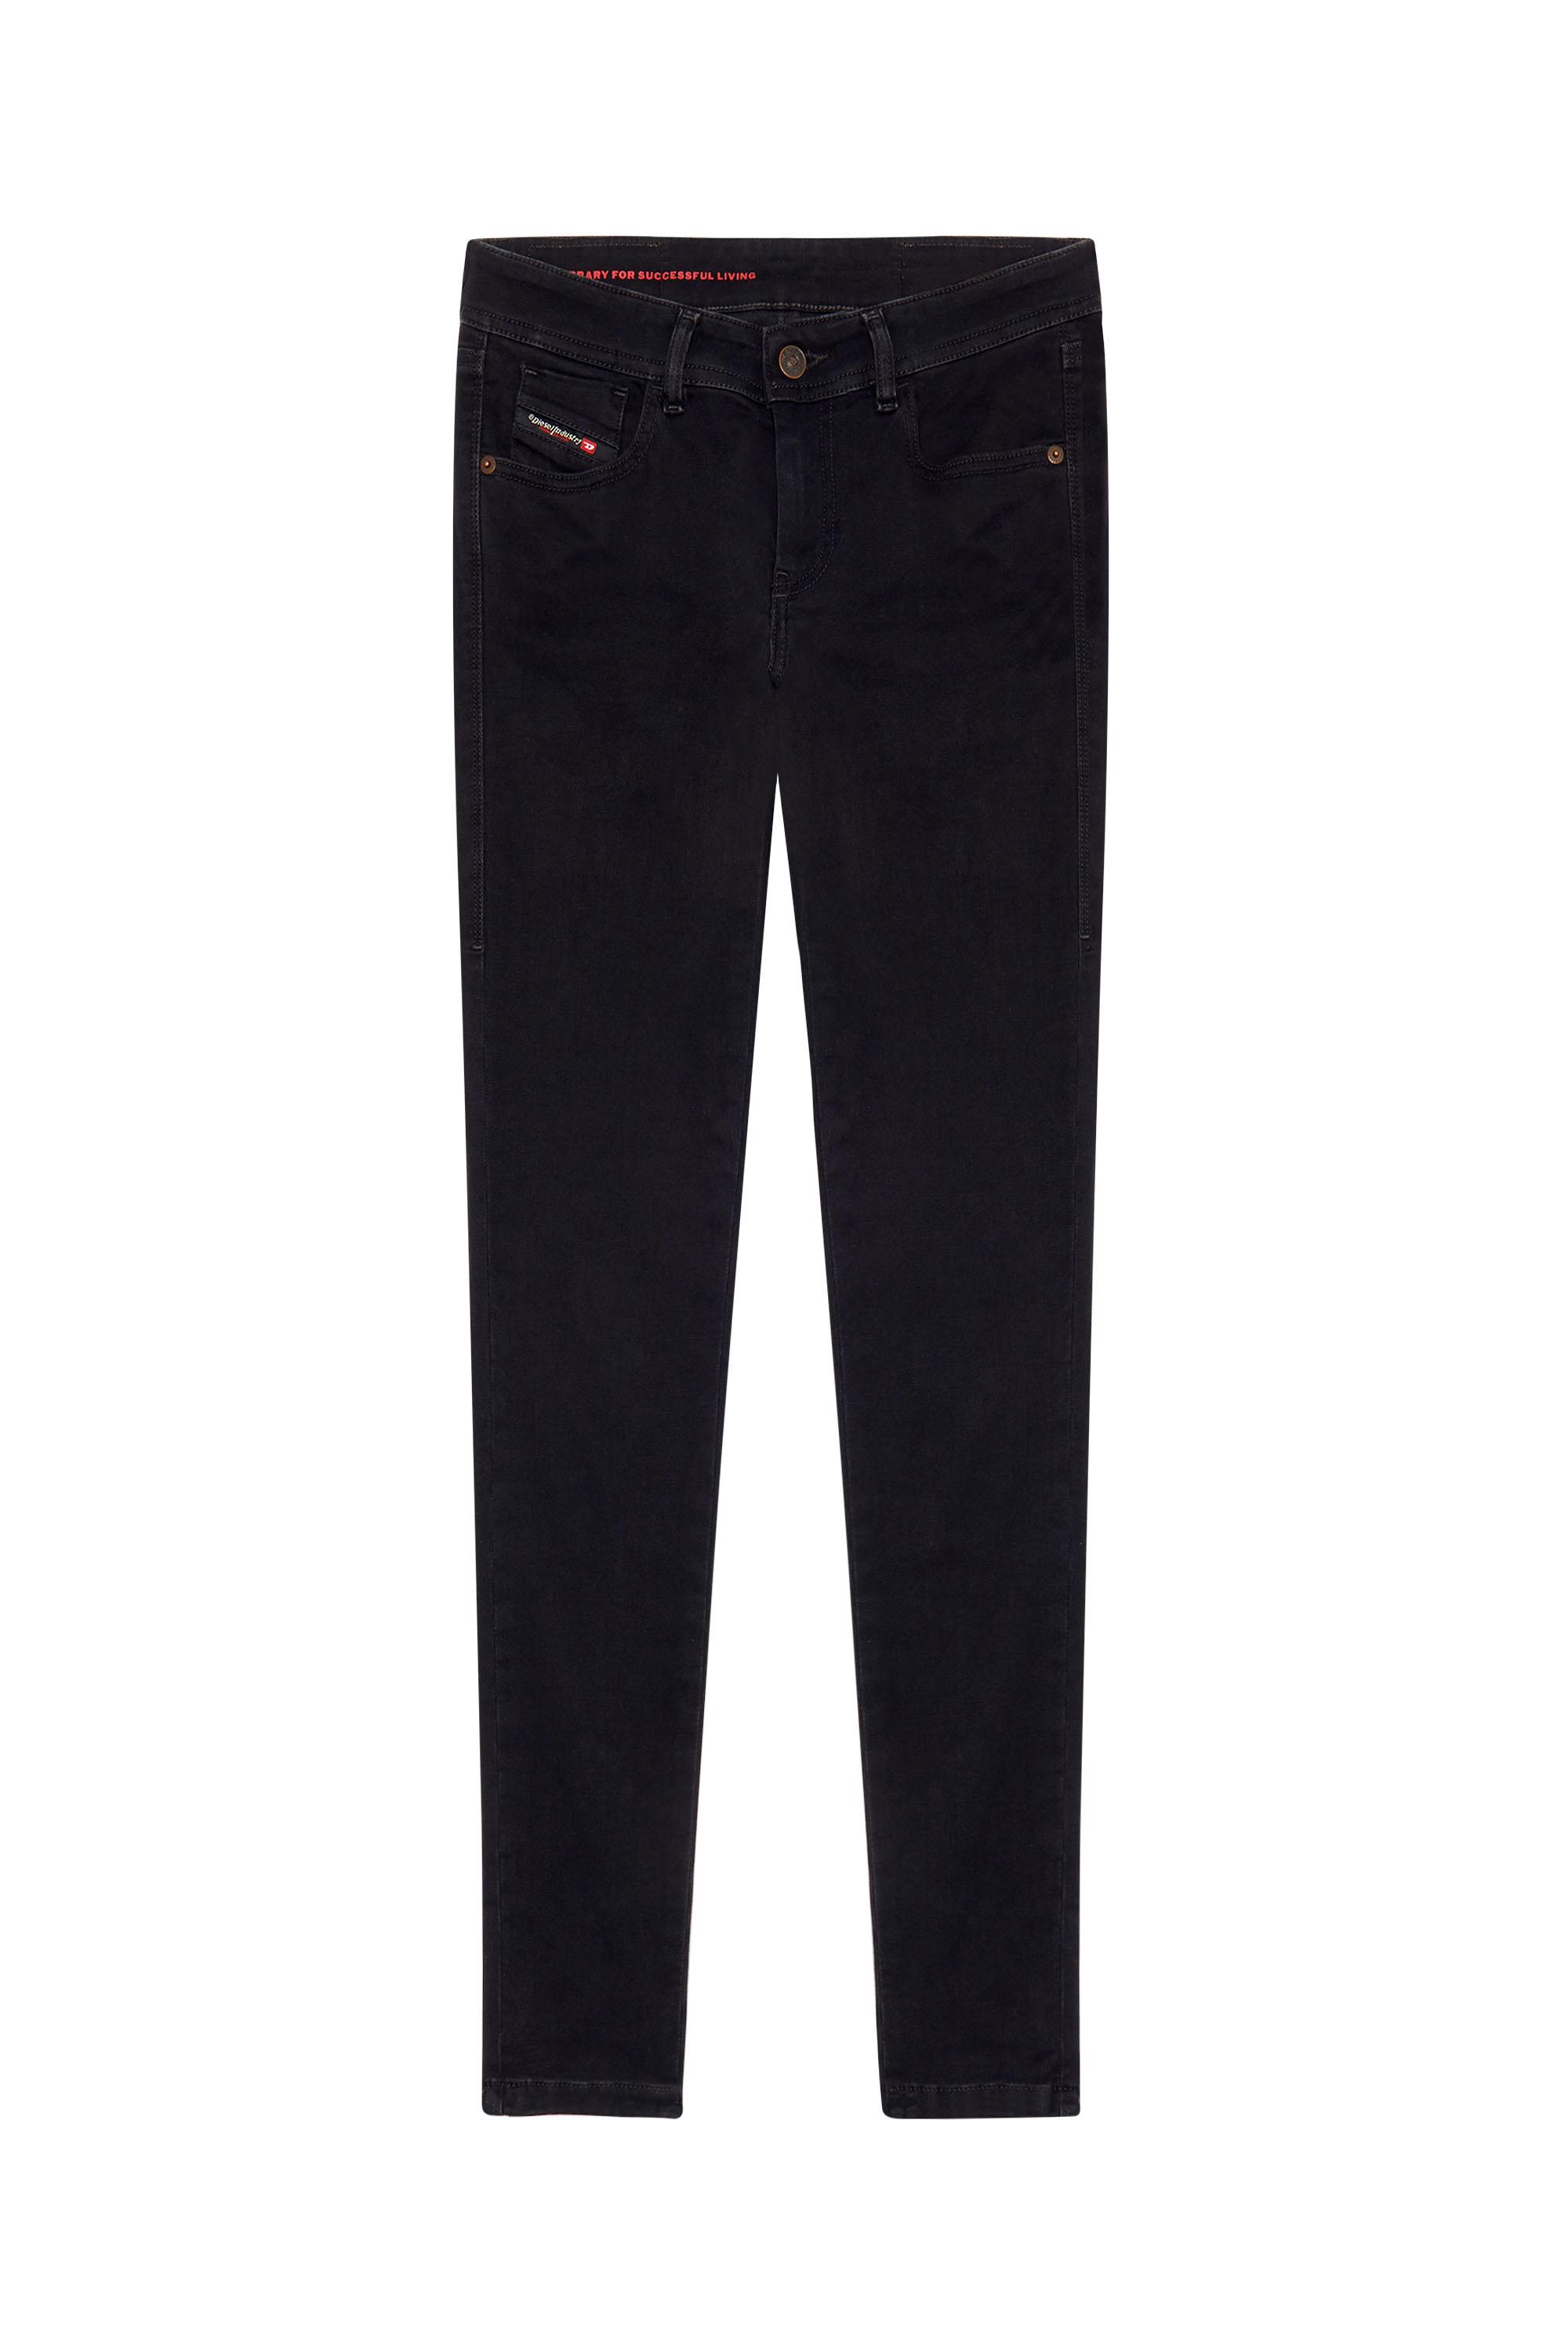 2018 Slandy low Z69VW Super skinny Jeans, Black/Dark grey - Jeans